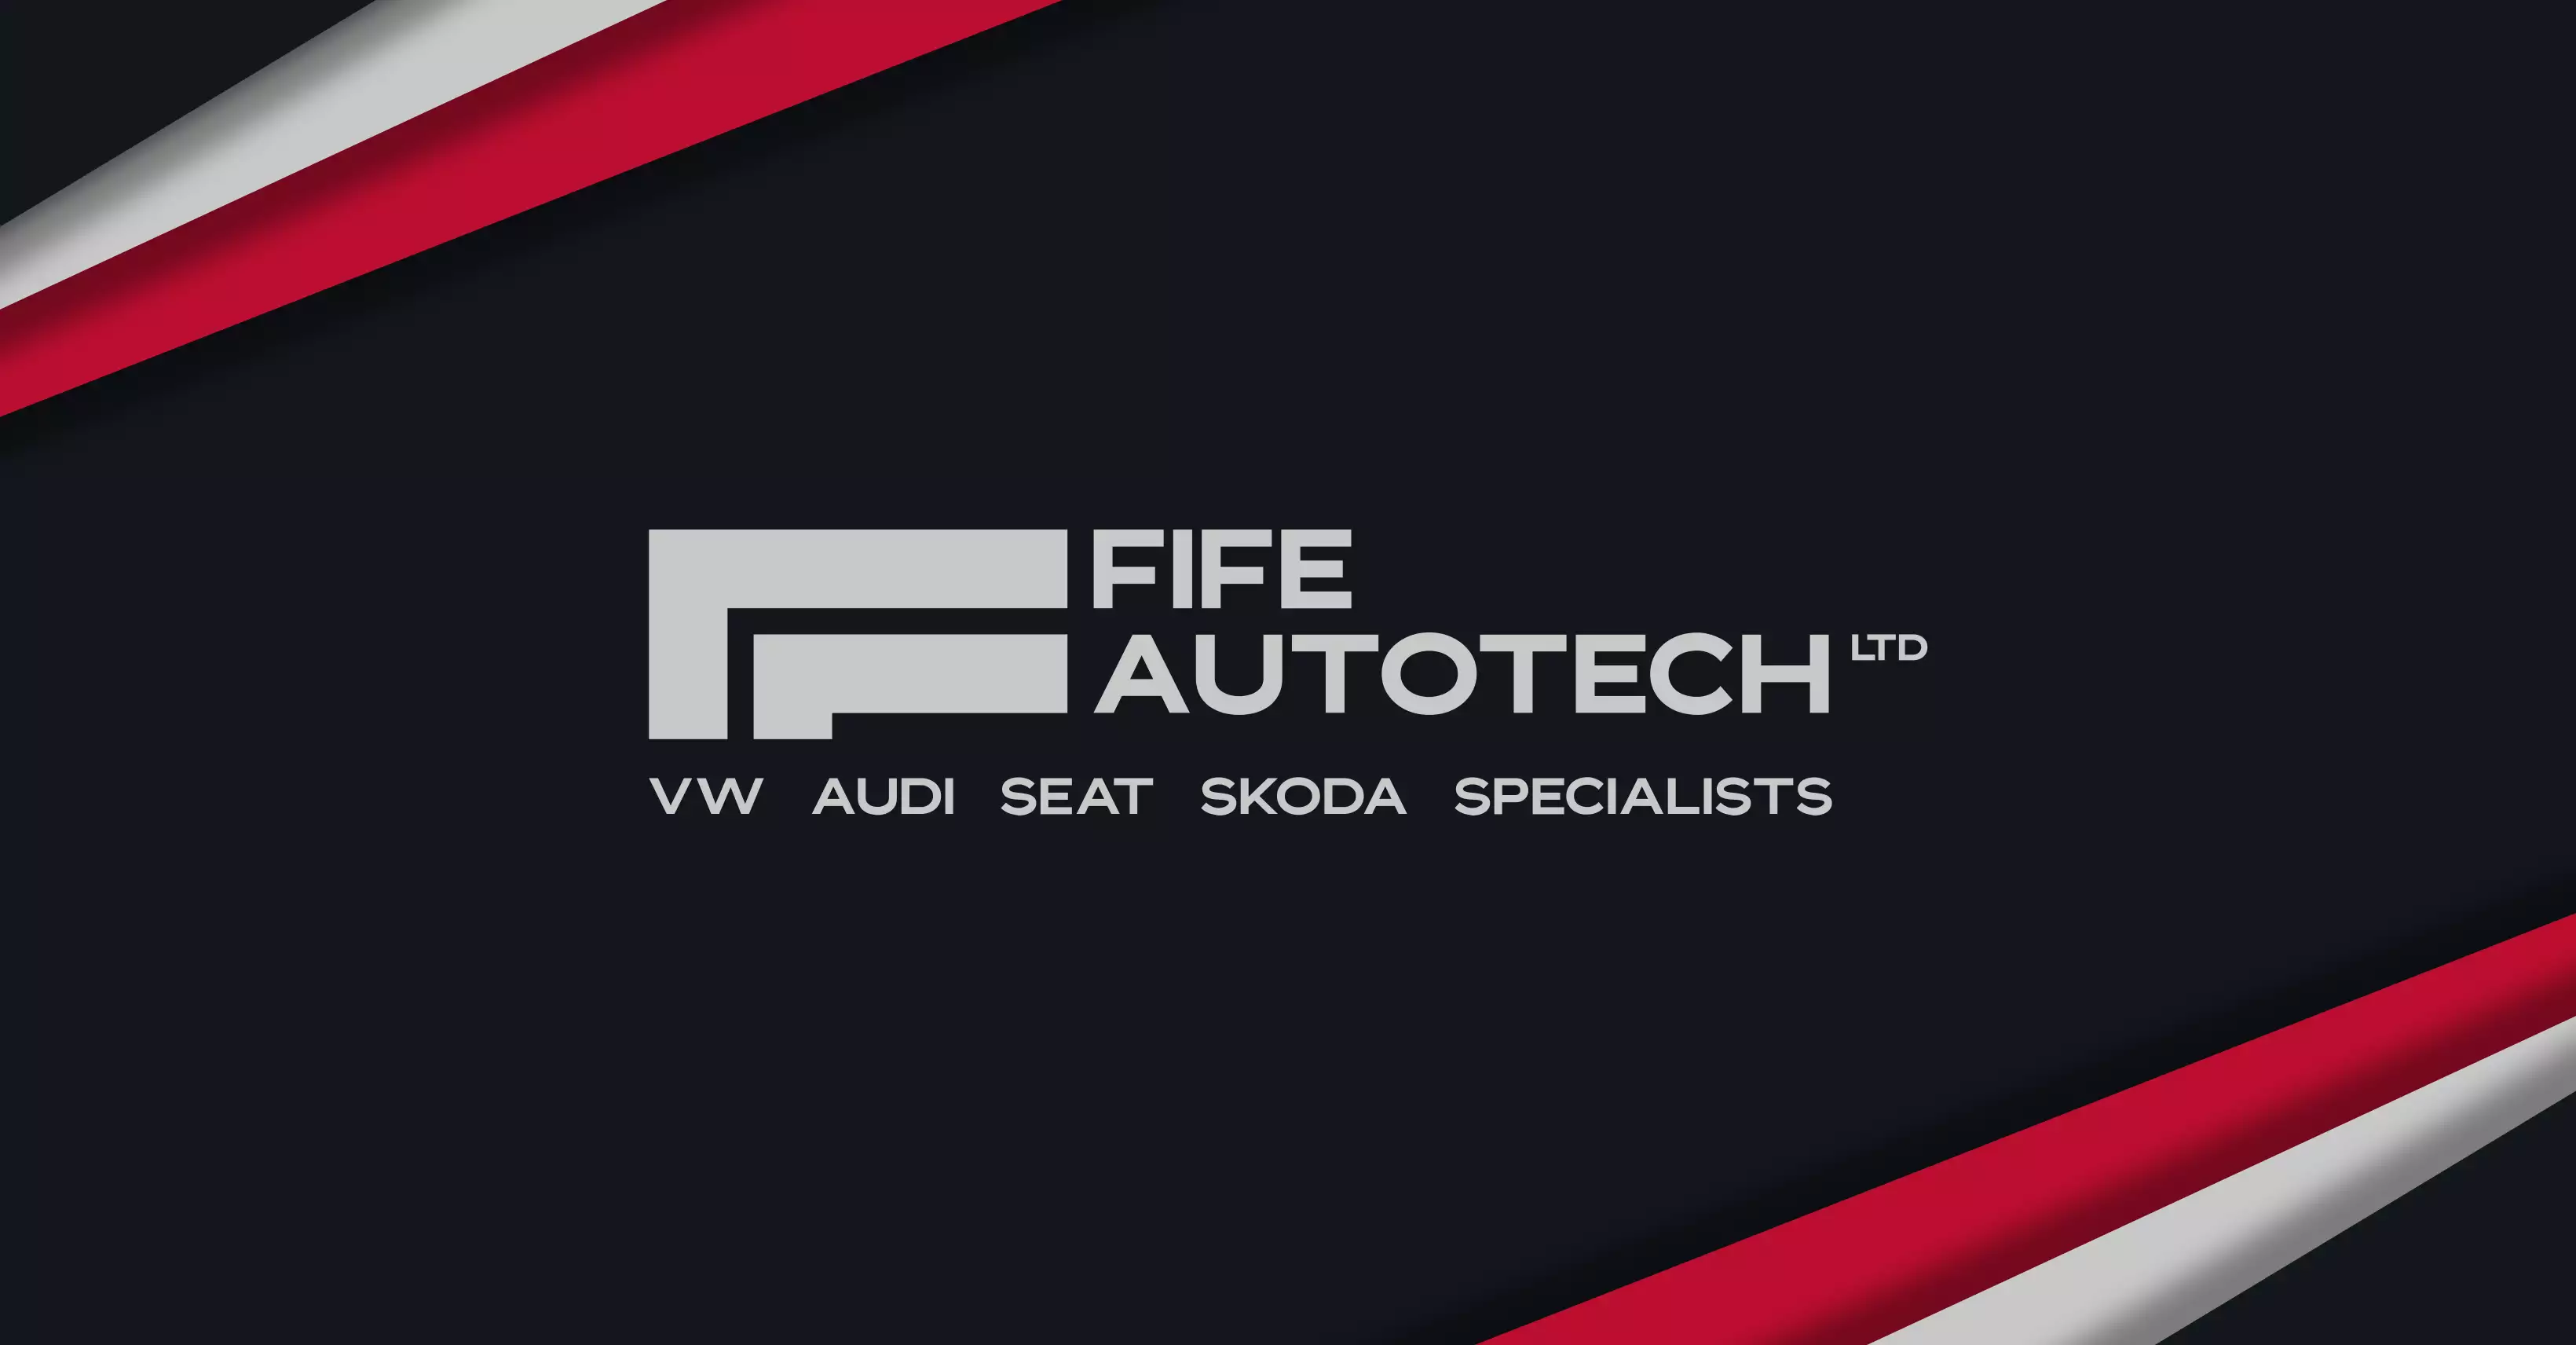 Logo Design and Brand Identity for Fife AutoTech